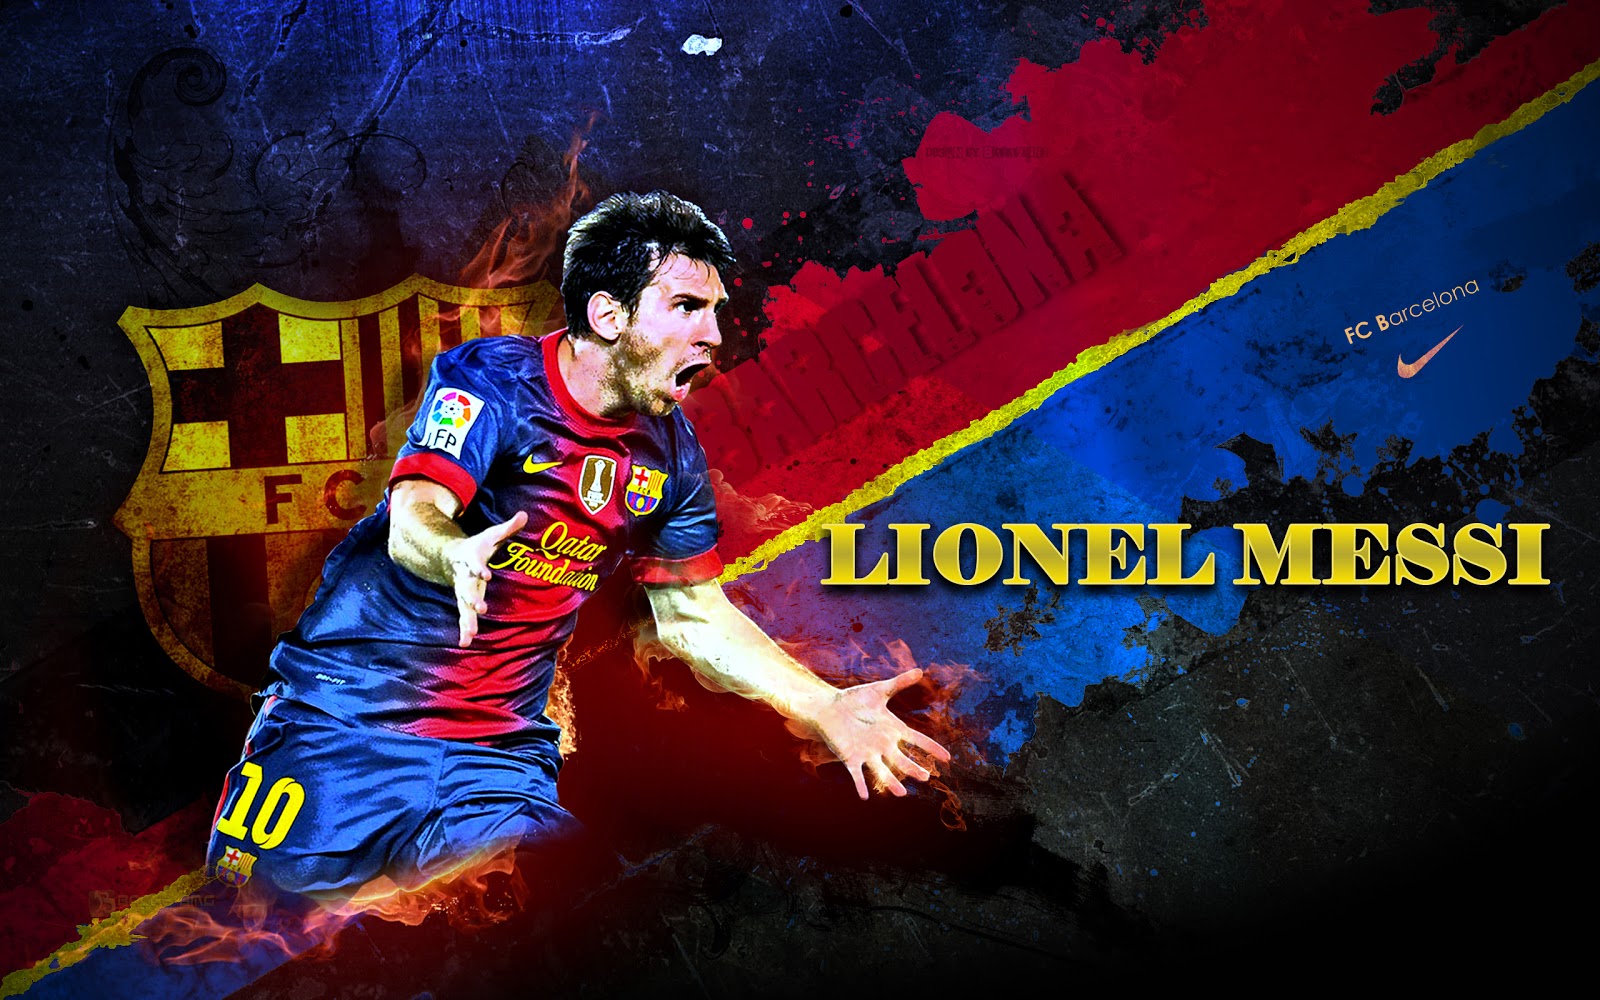 Lionel Messi 2013 Wallpaper Widescreen 1600x1000